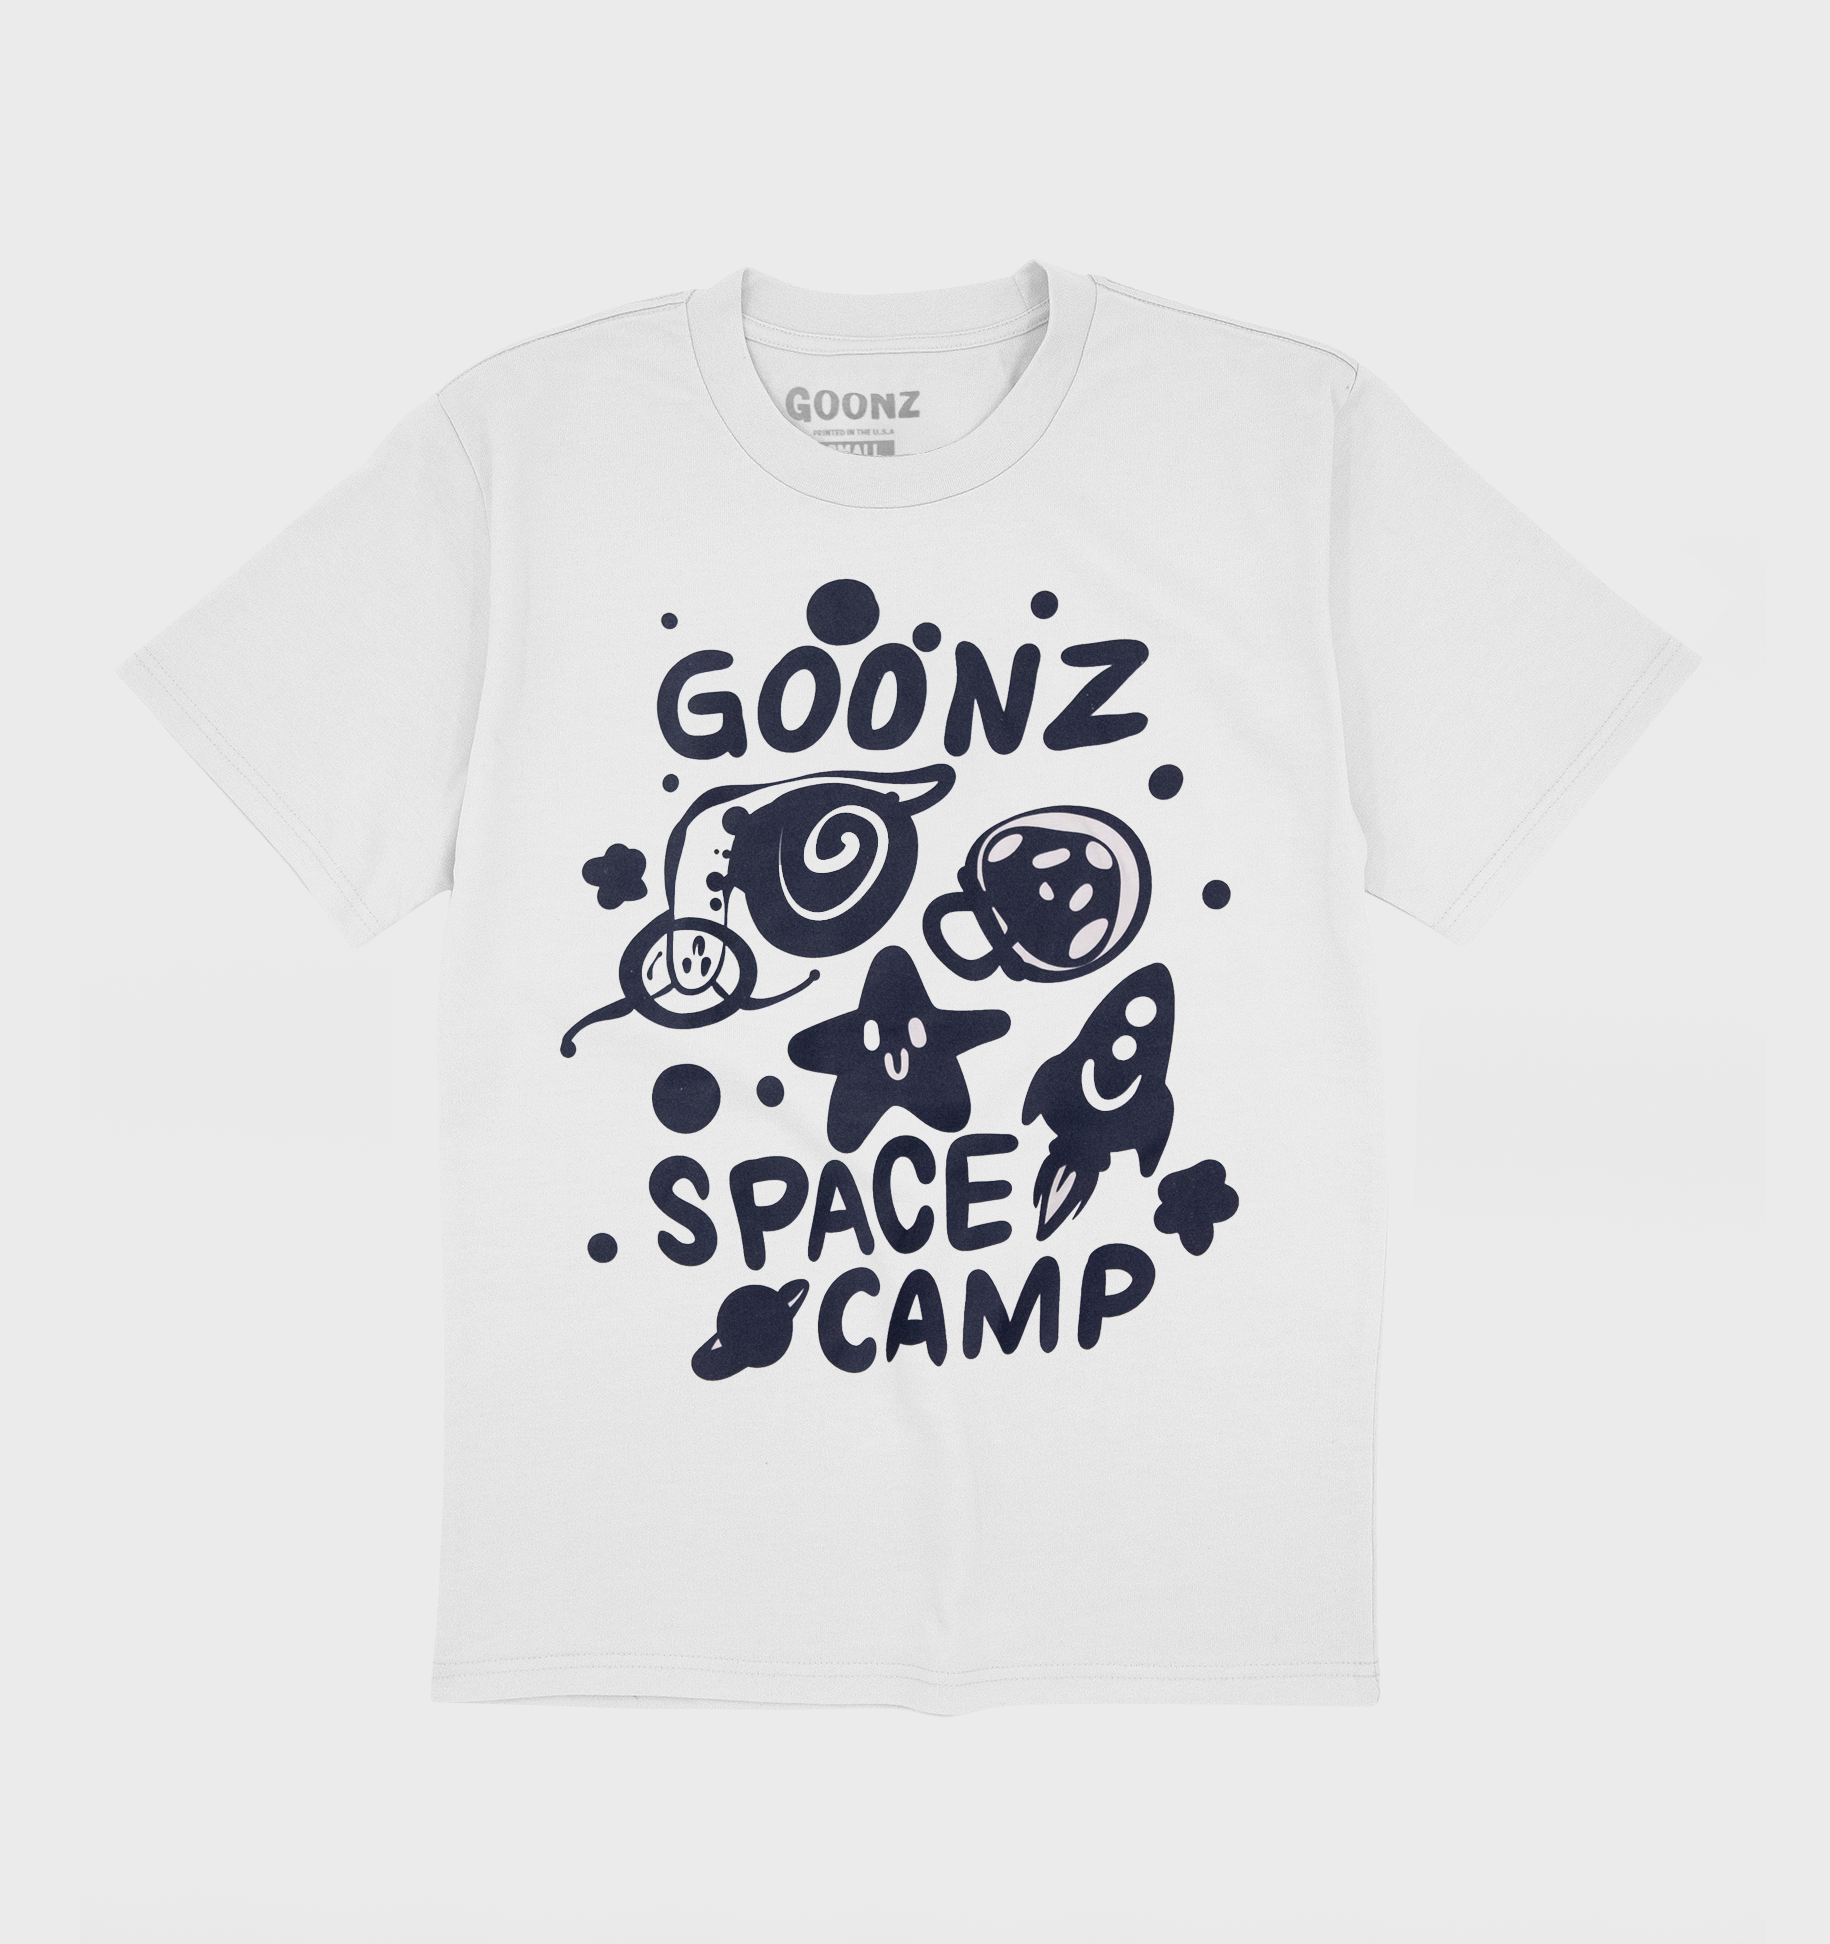 Goonz Space Camp White Tee